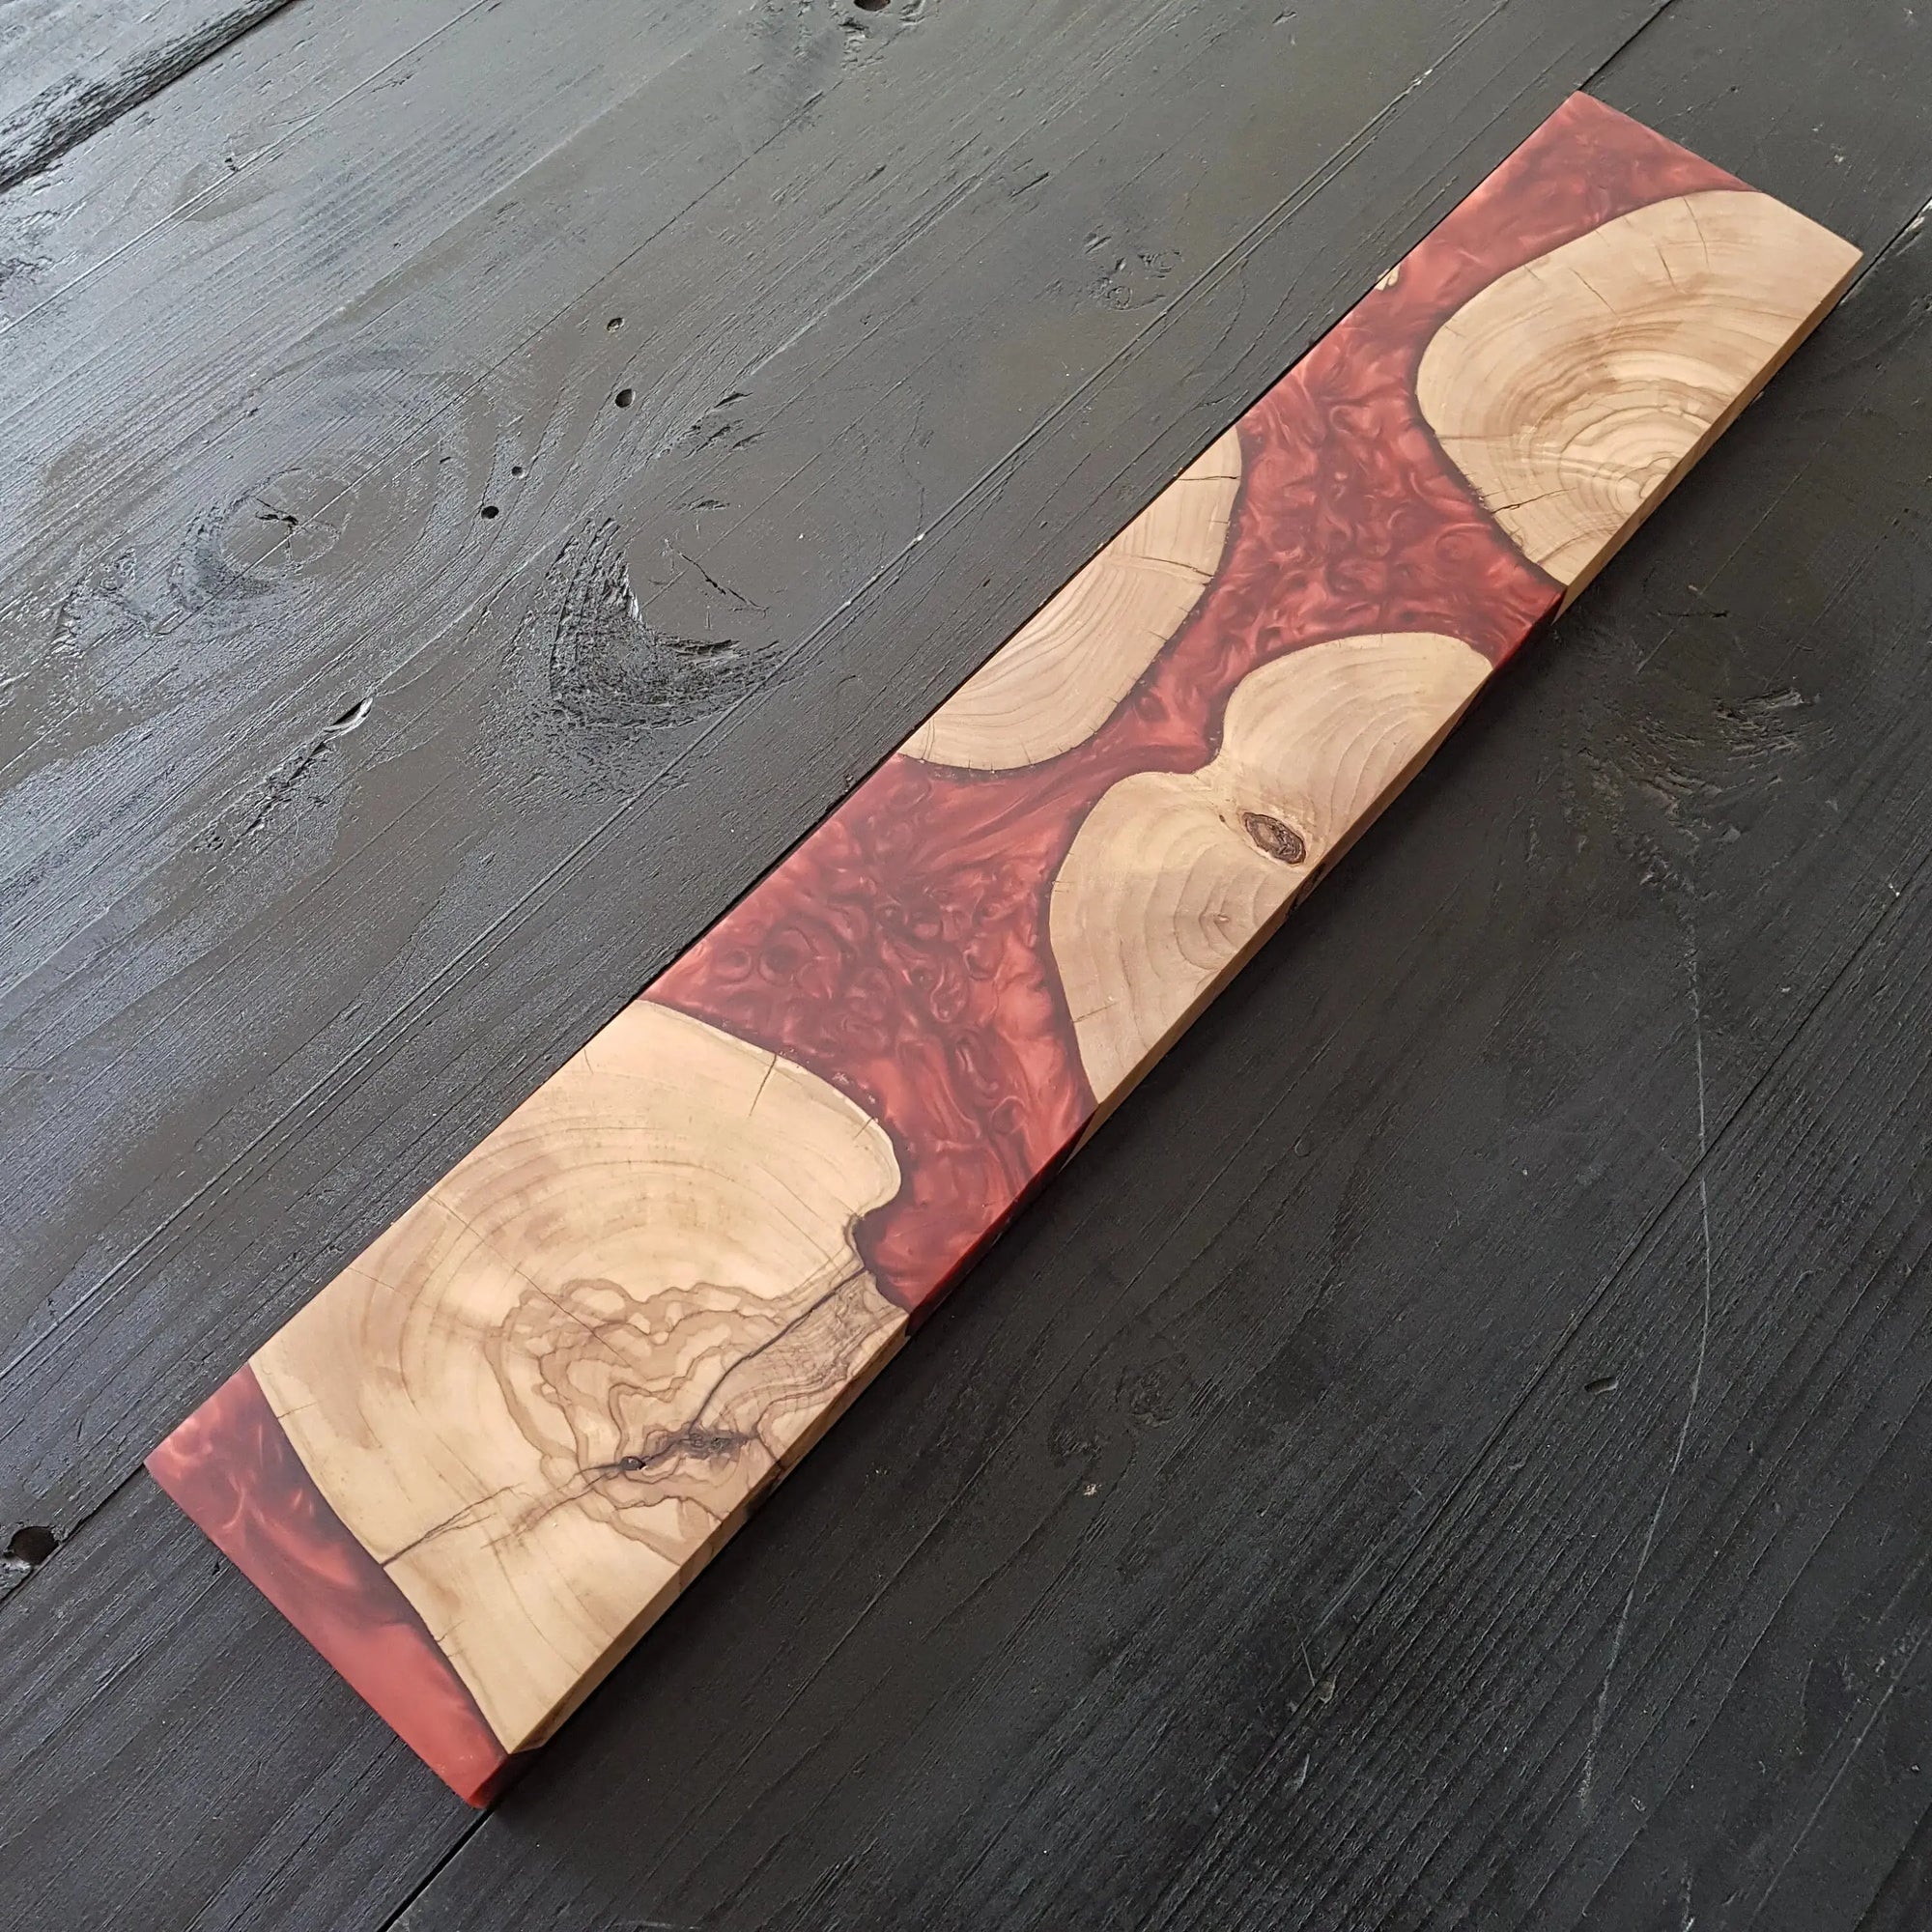 Magnetic Knife Rack For 5 Knives On Wooden